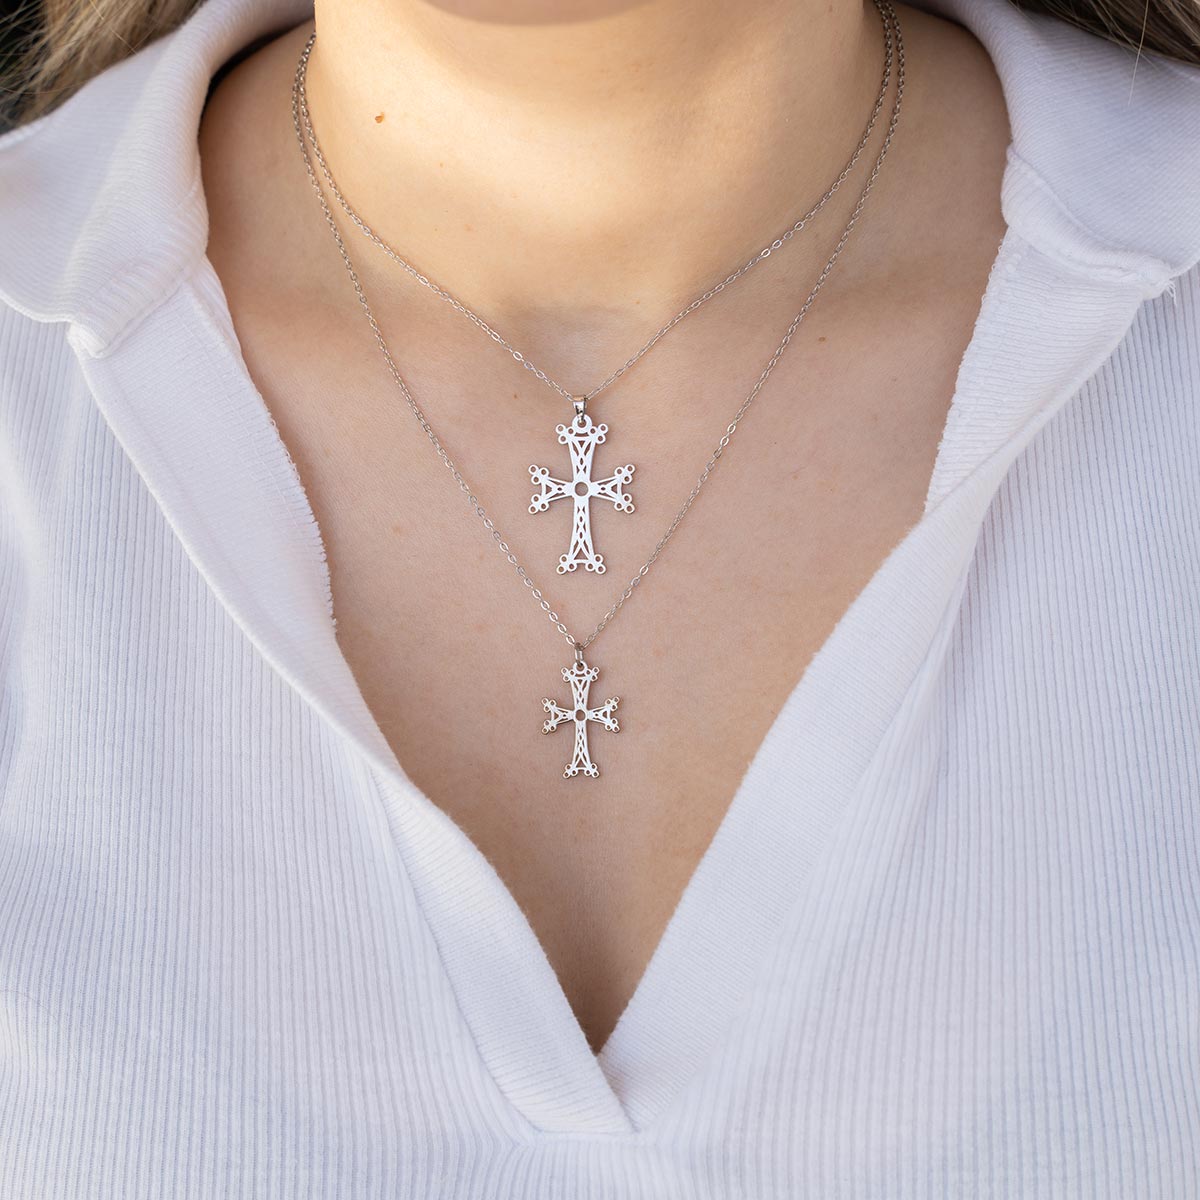 Armenian Cross Motif Necklace